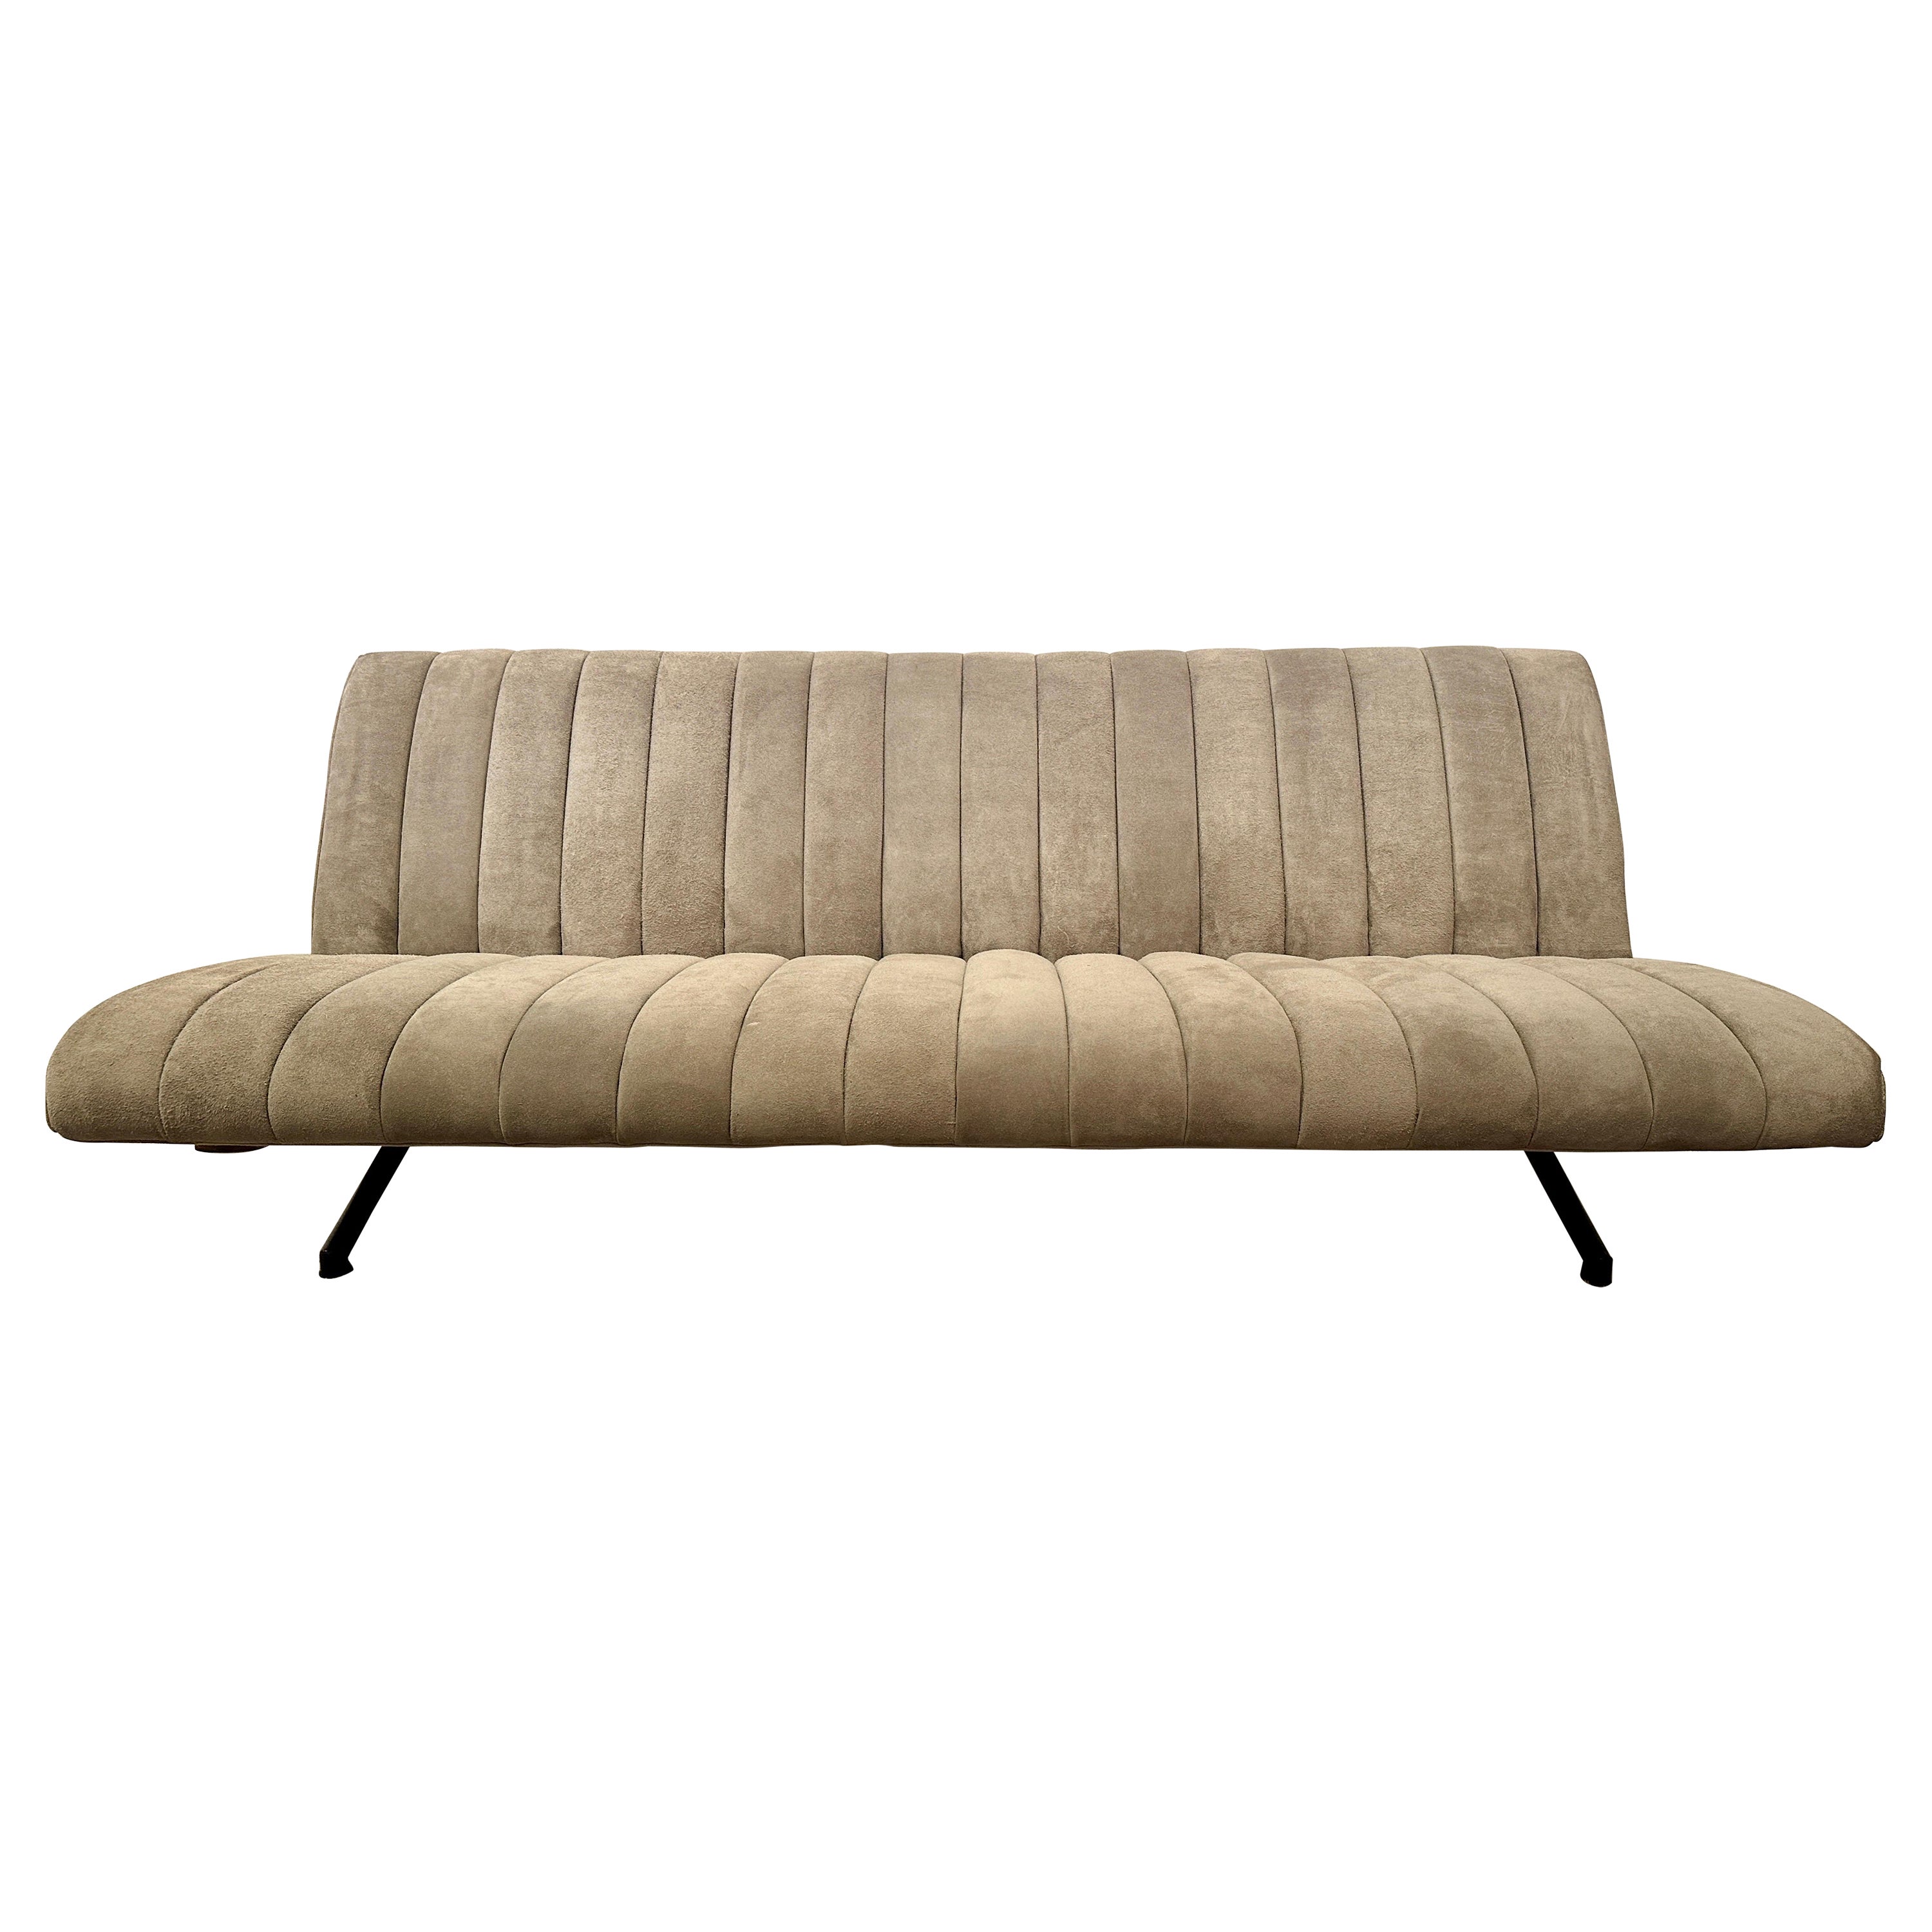 Osvaldo Borsani for Tecno 'D70' Sofa in Gray Suede Leather For Sale